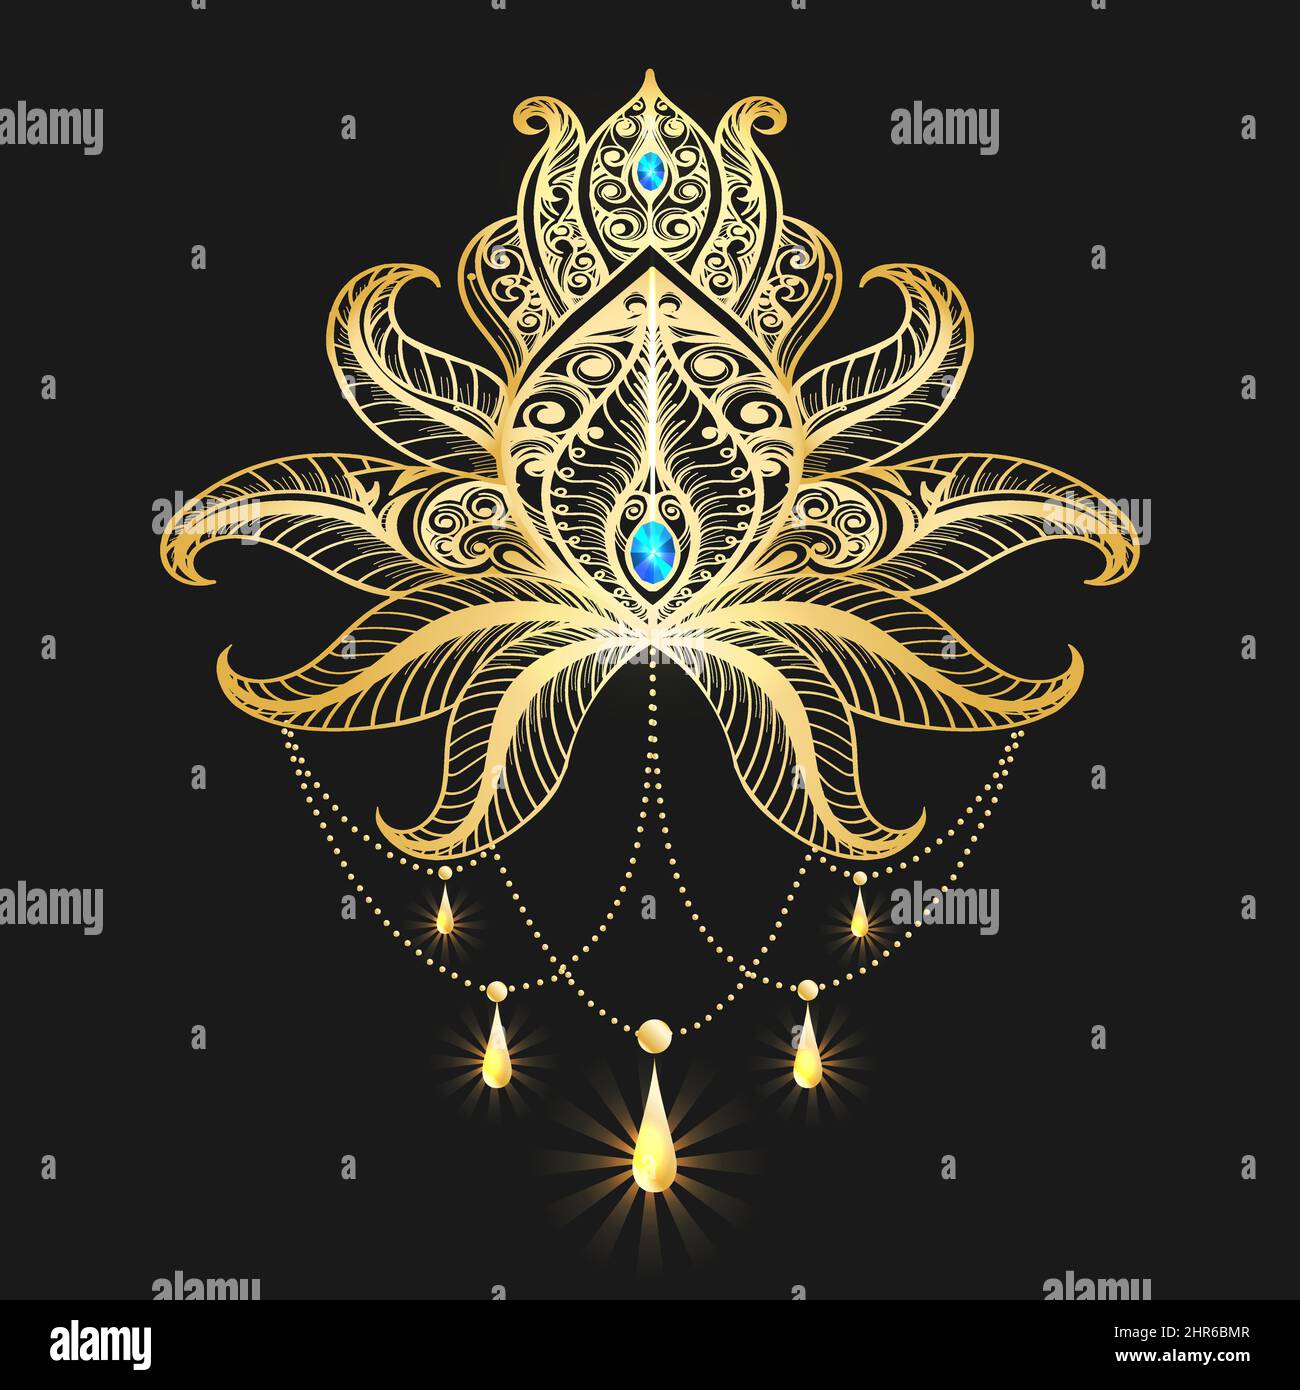 Golden Lotus Flower Mandala with Gems on Black Background. Vector illustration. Stock Vector